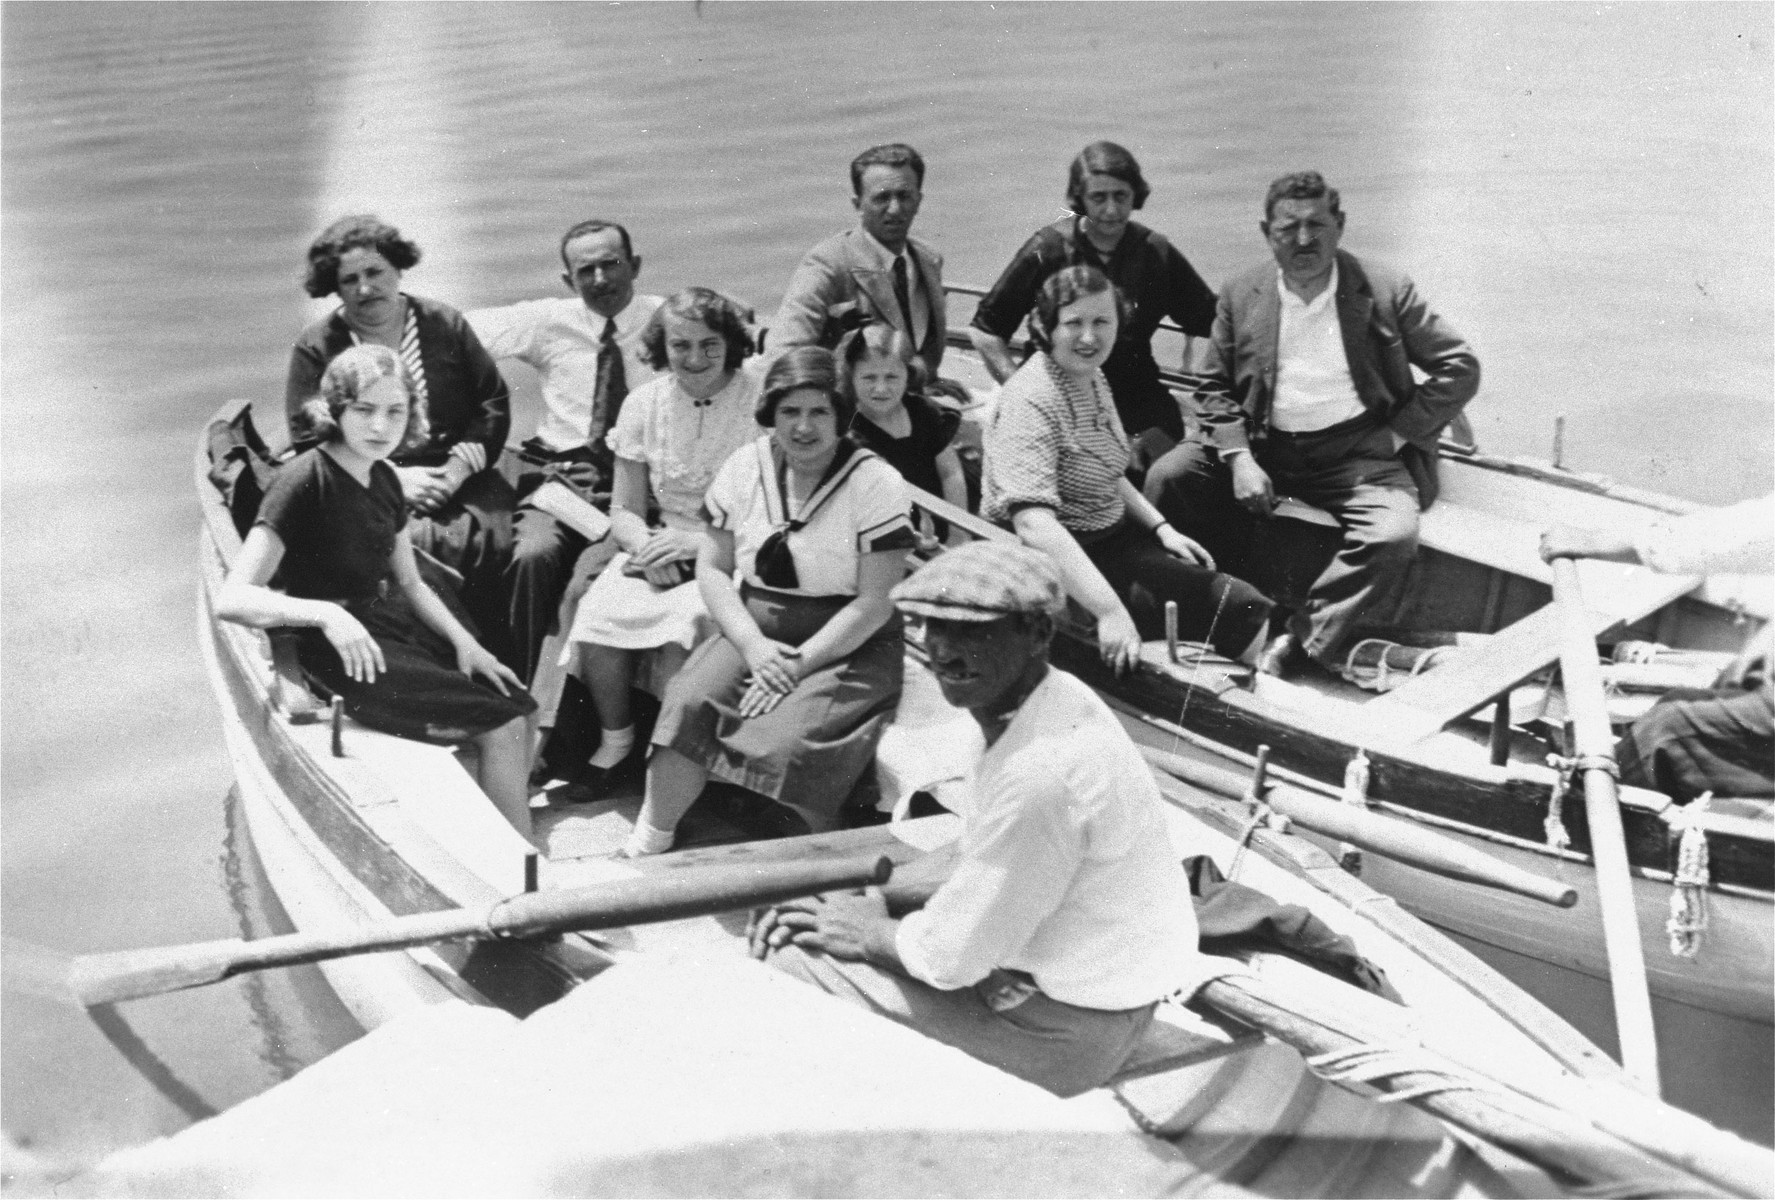 Members of the Klein/Kupferman family take a boat ride in Crikvenica, Croatia.